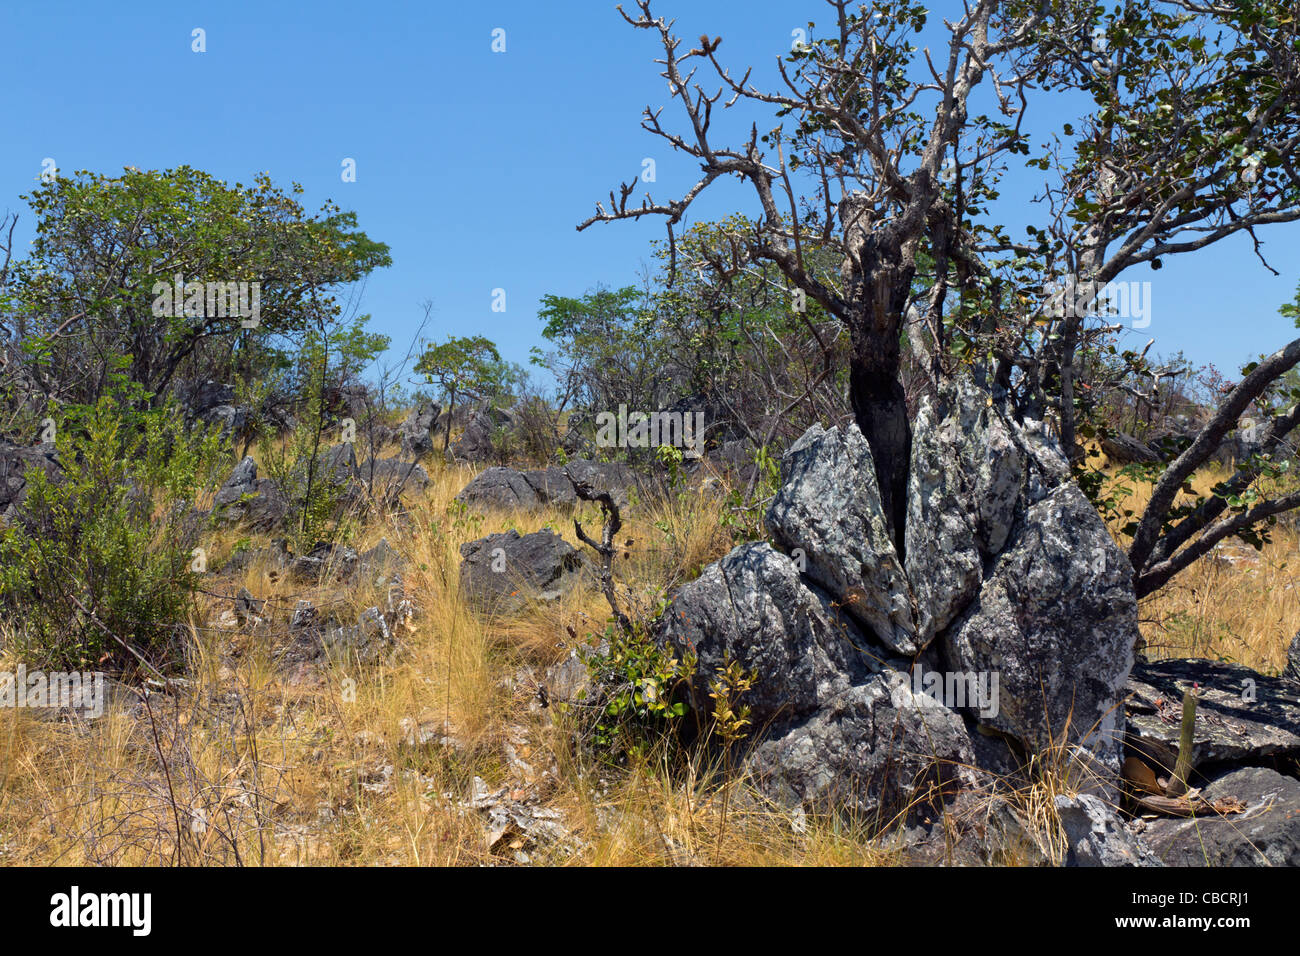 Savanna biome called cerrado, Brazil Highlands: vegetation on rock outcrop: tree is Wunderlichia crulsiana of Asteraceae family.The cerrado is a biodiversity hotspot. Stock Photo